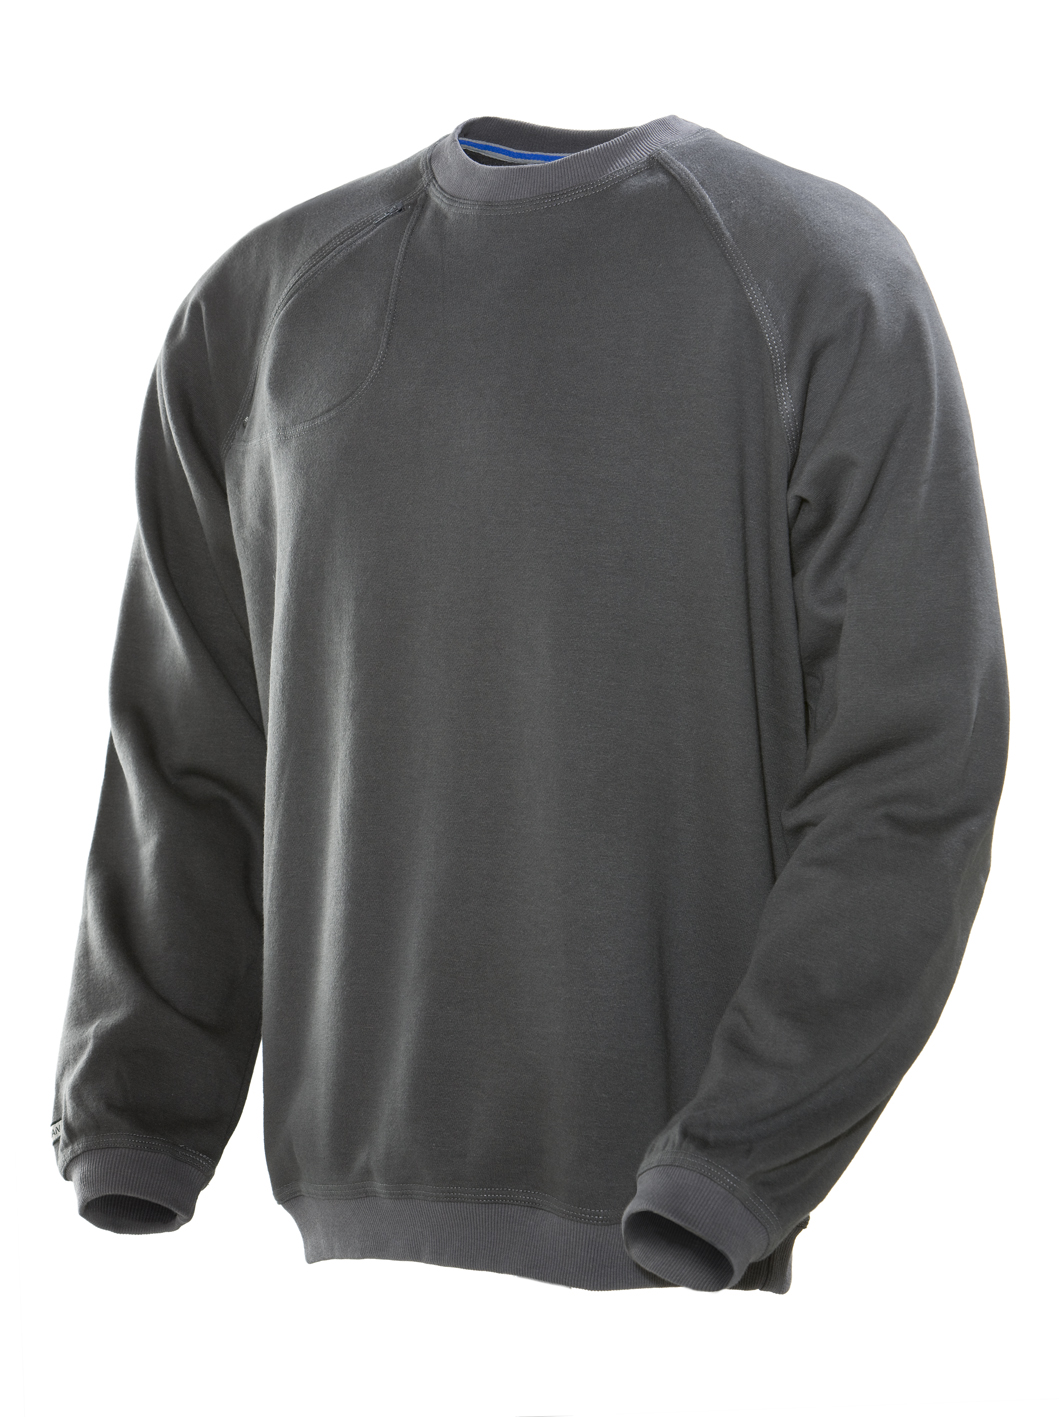 5122 Sweatshirt XXL gris antracite